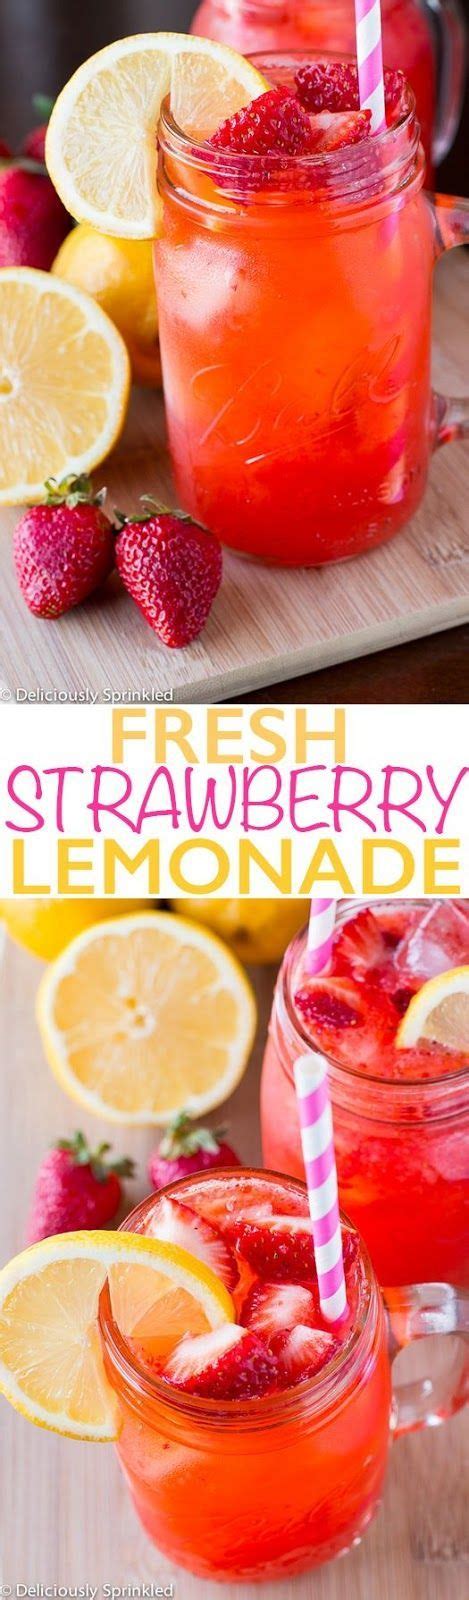 The Best Strawberry Lemonade Yummy Drinks Healthy Drinks Yummy Food Fruit Drinks Tasty